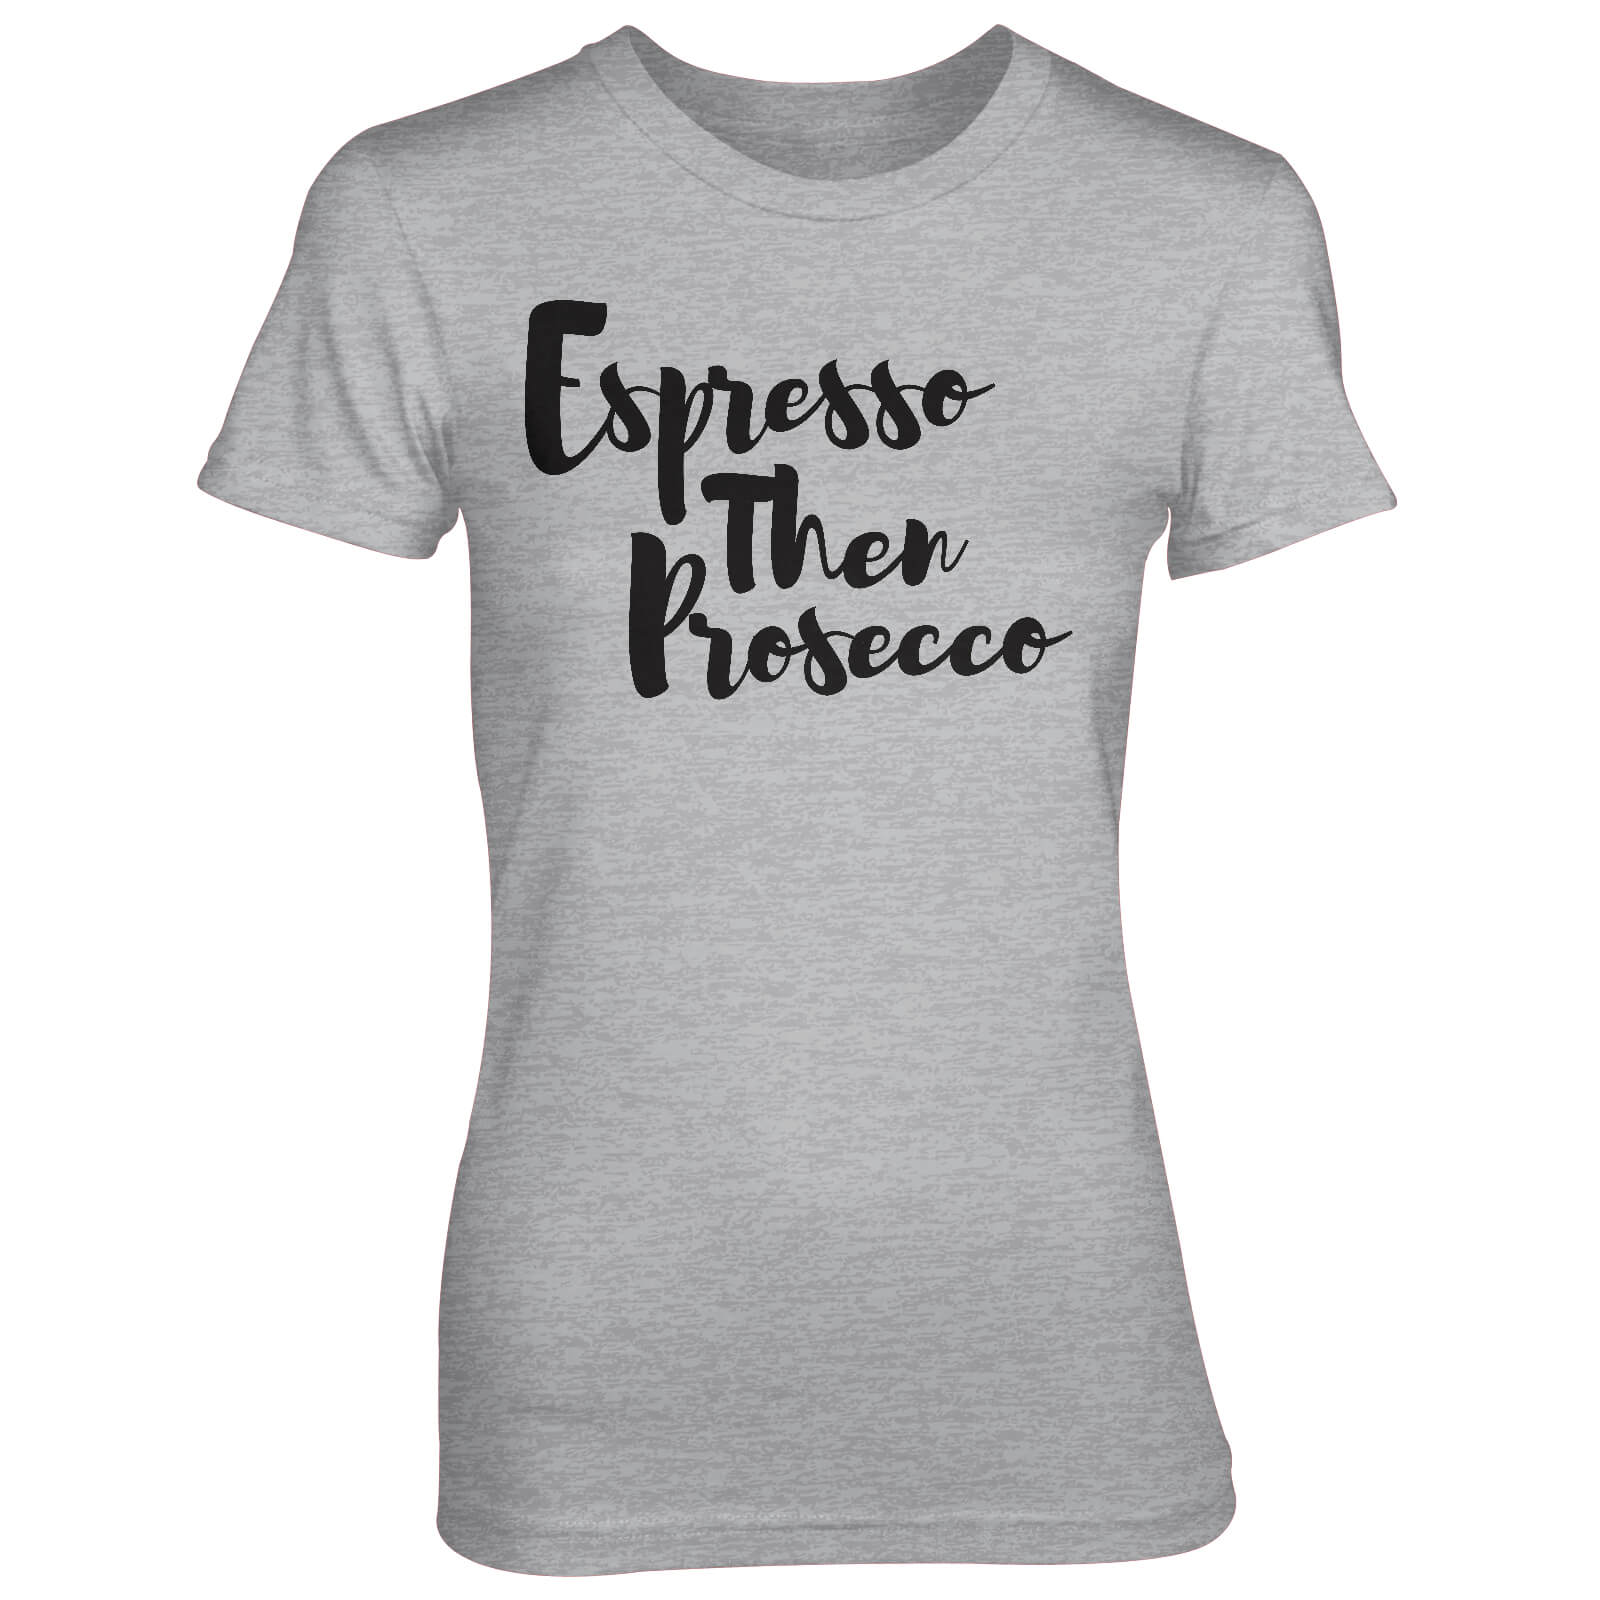 Espresso Then Prosecco Women's Grey T-Shirt - S - Grey